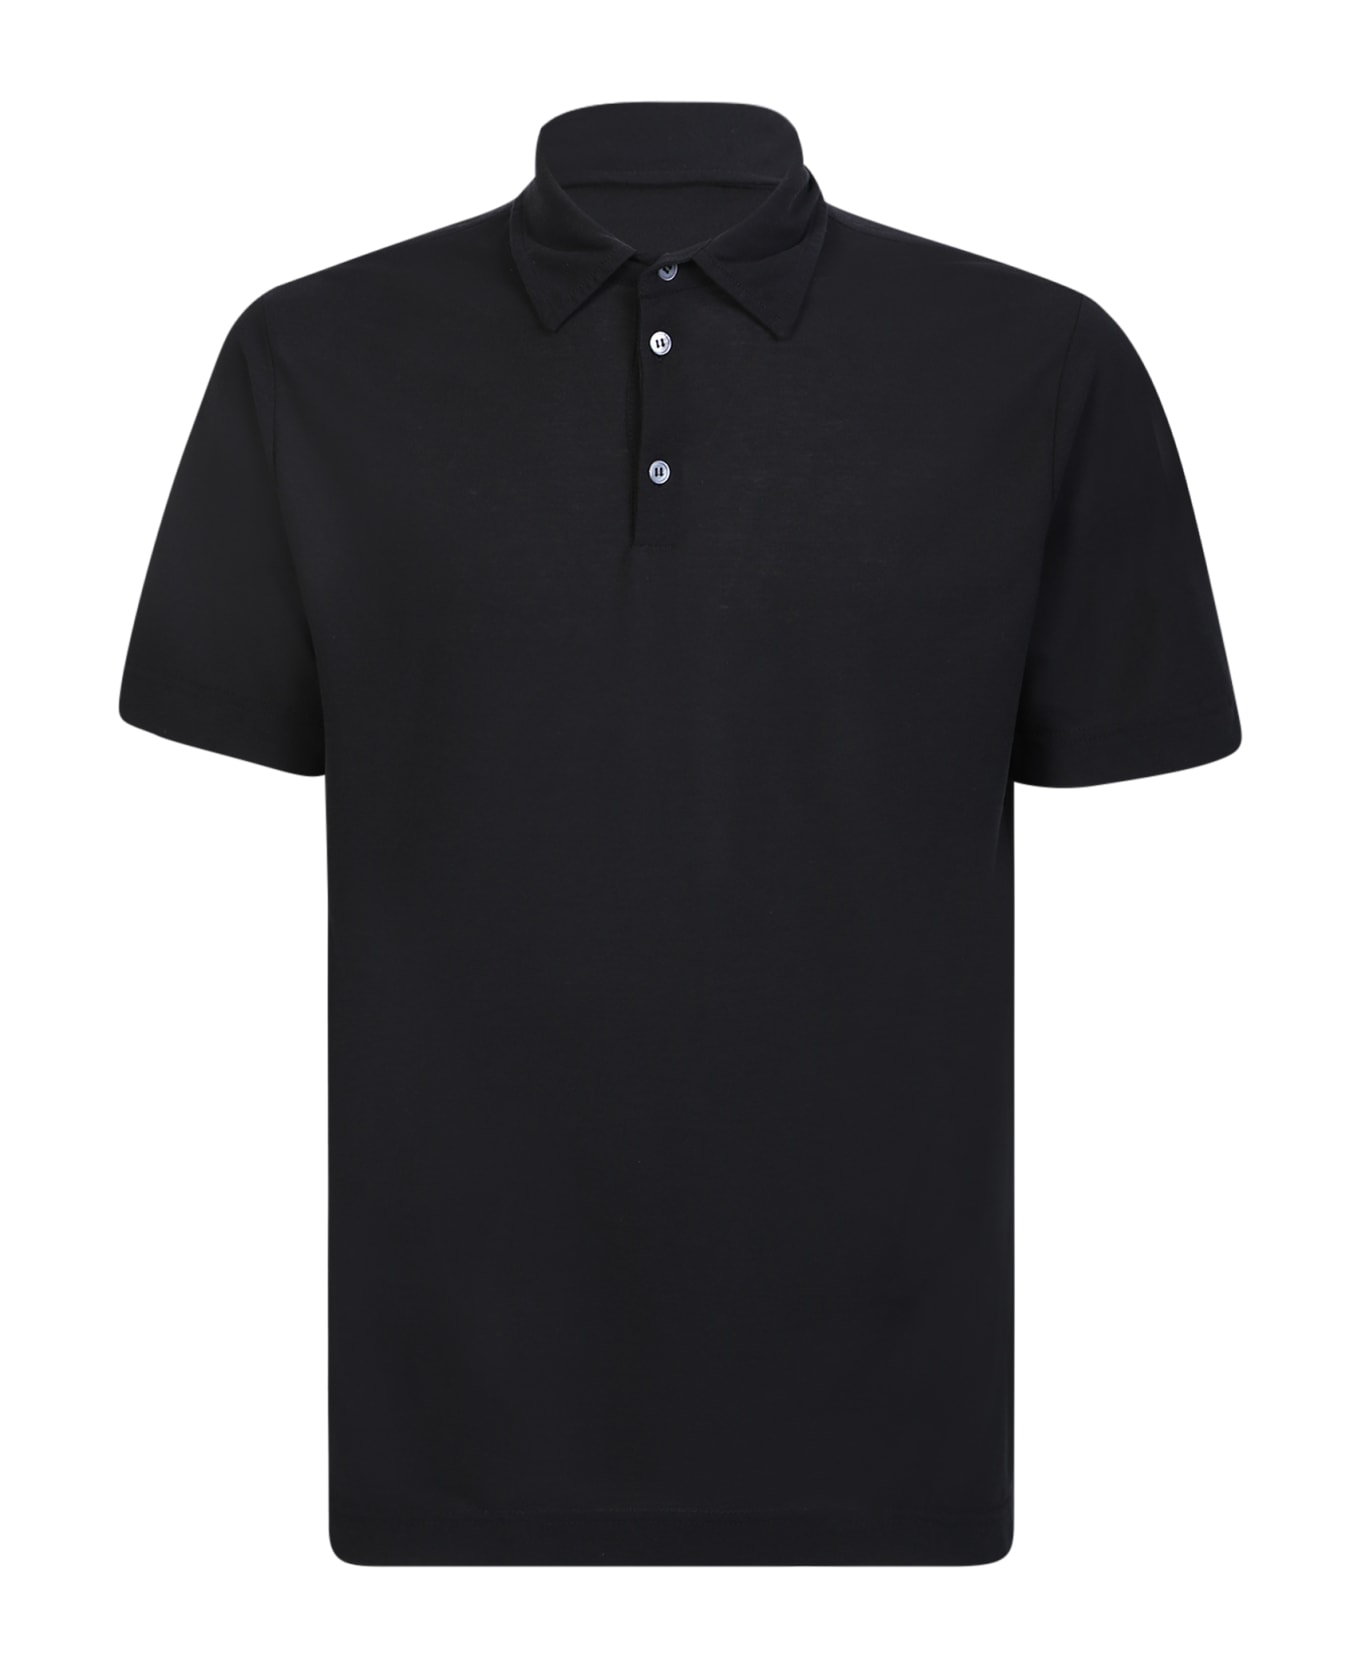 Zanone Black Polo Shirt - Black ポロシャツ